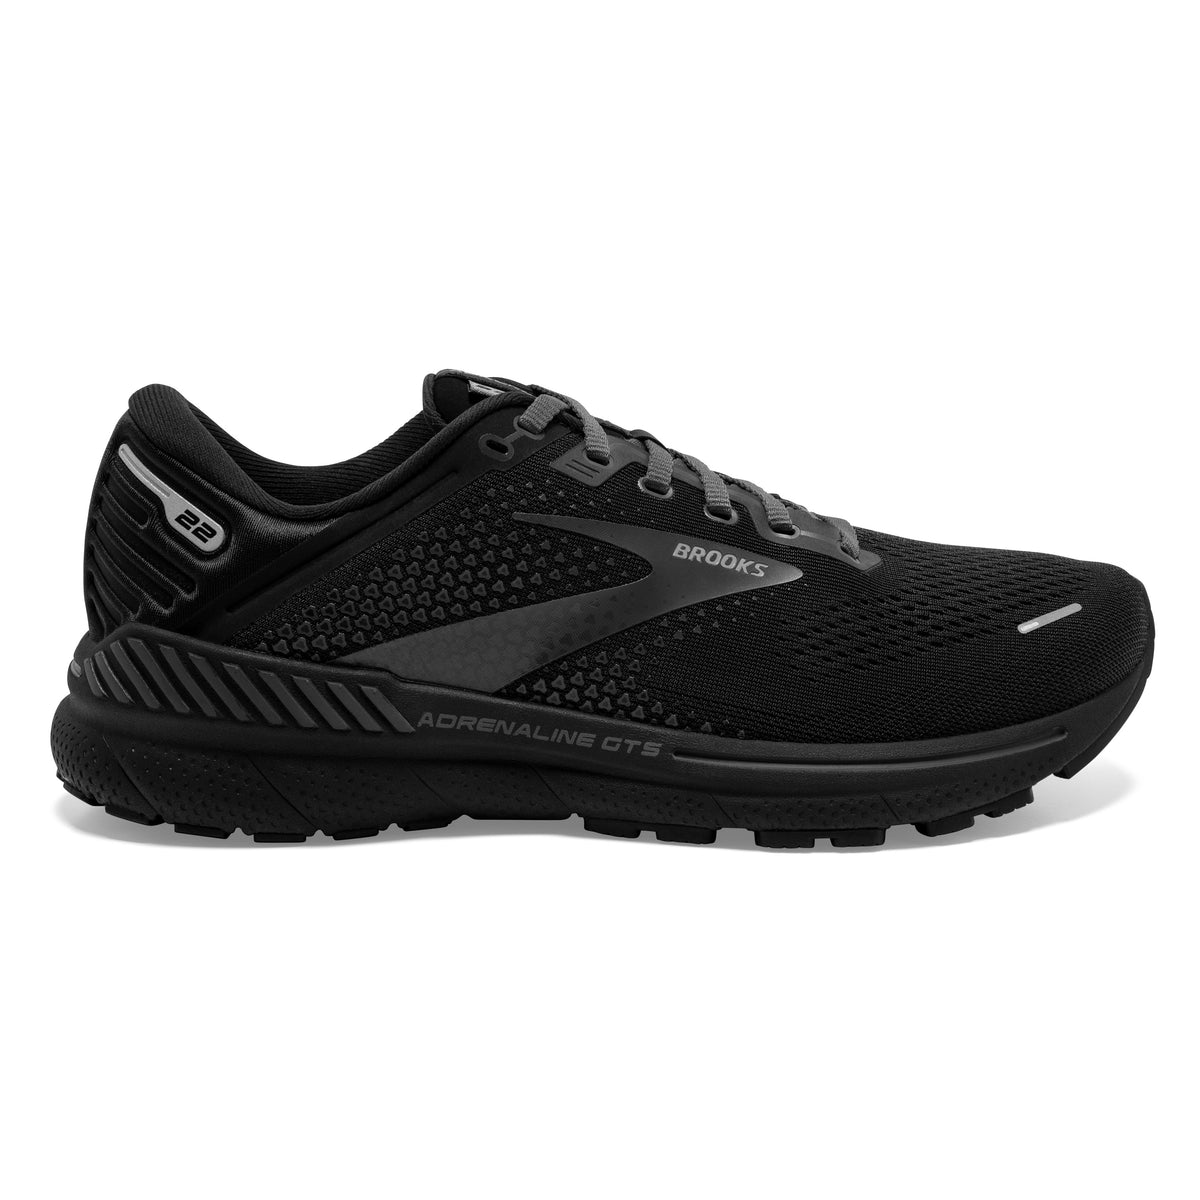 Factory Shoe Online  Buy Shoes Online Canada - Brooks Adrenaline GTS Wide  Alloy Black